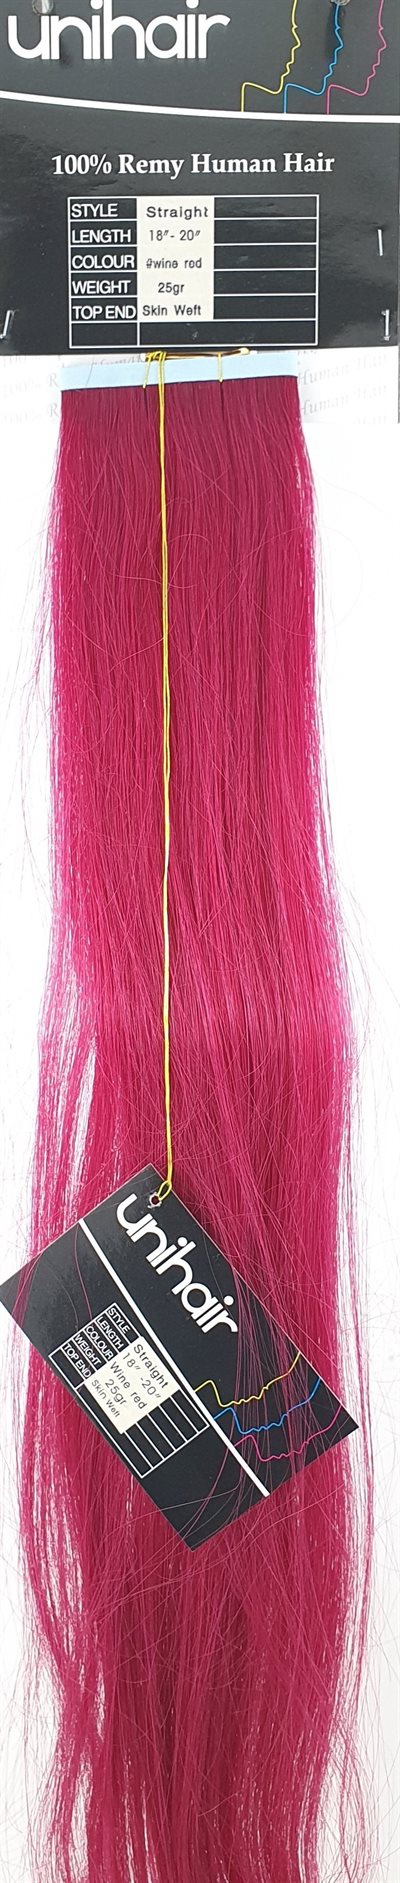 Human Hair - Skin Weft hair, color Wine Red- 18" (45 cm. length.)